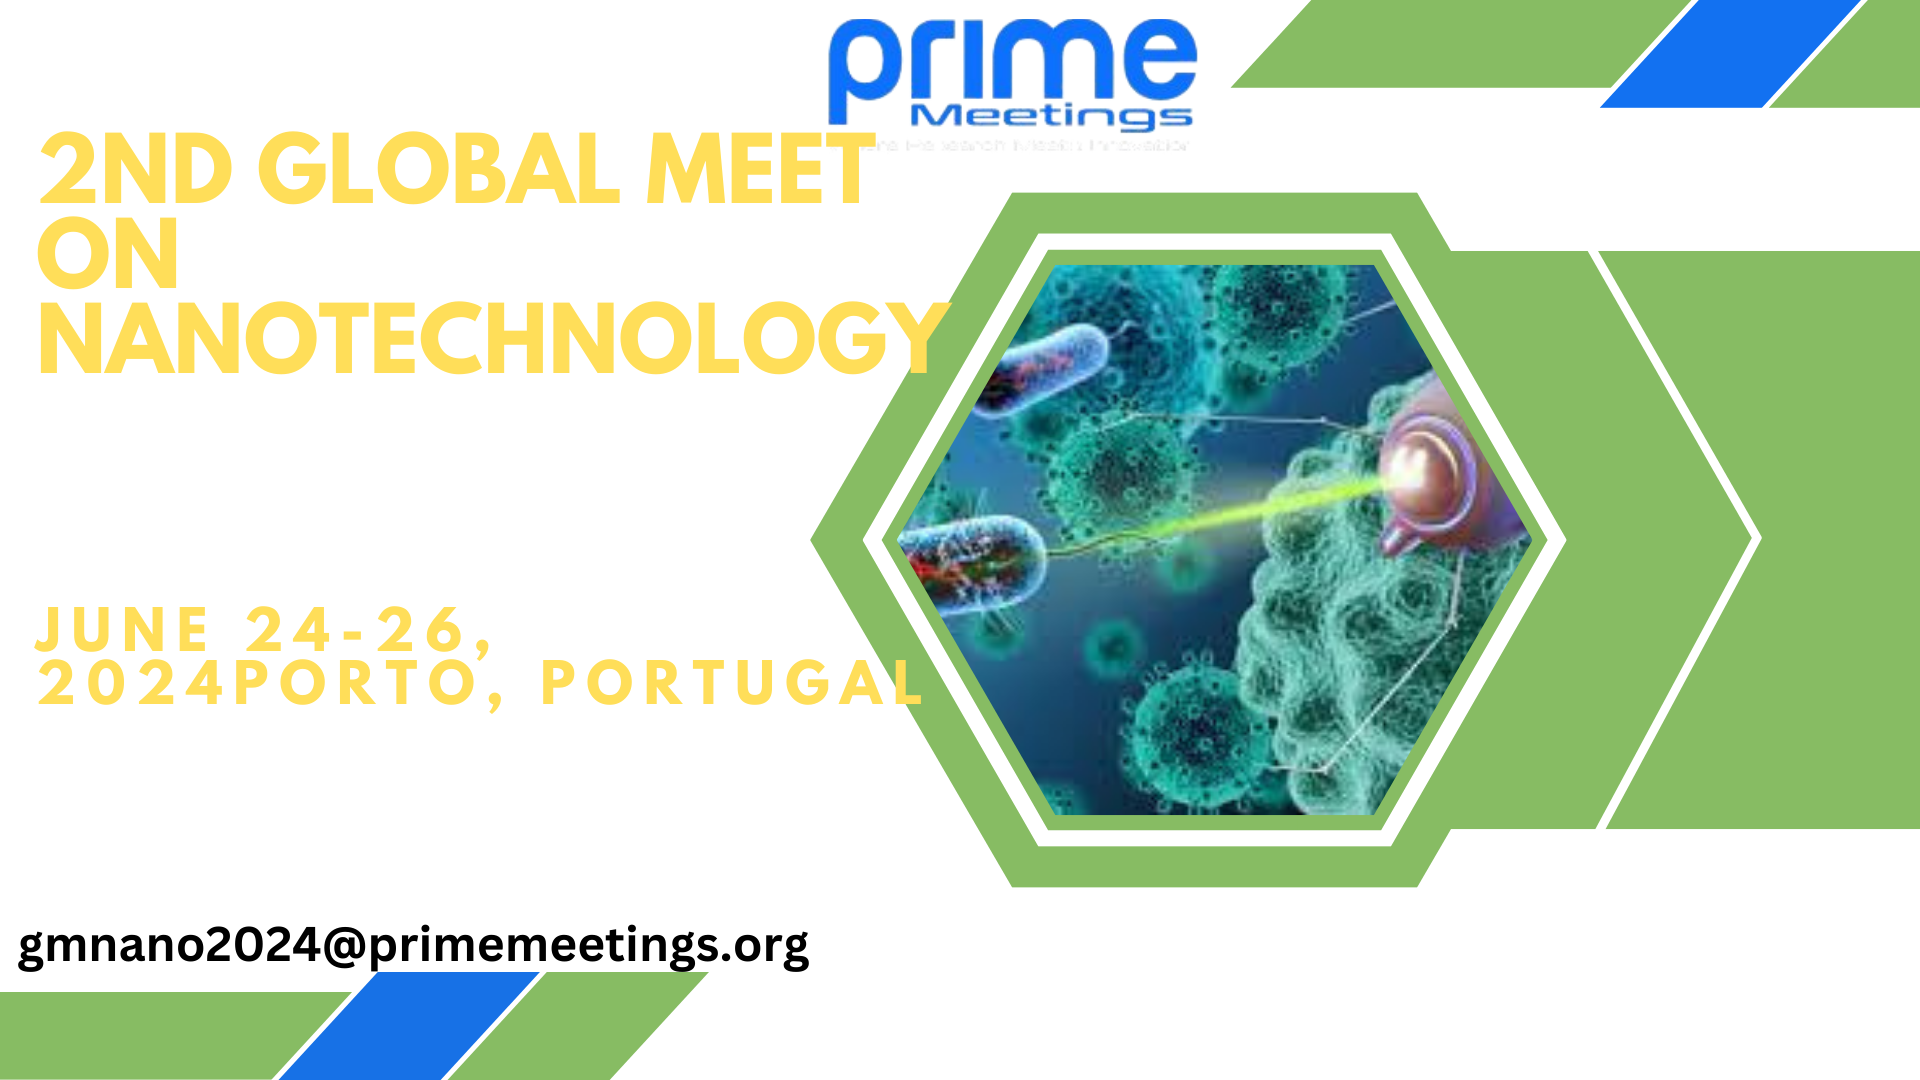 2nd Global Meet on Nanotechnology, Porto, Lisboa, Portugal